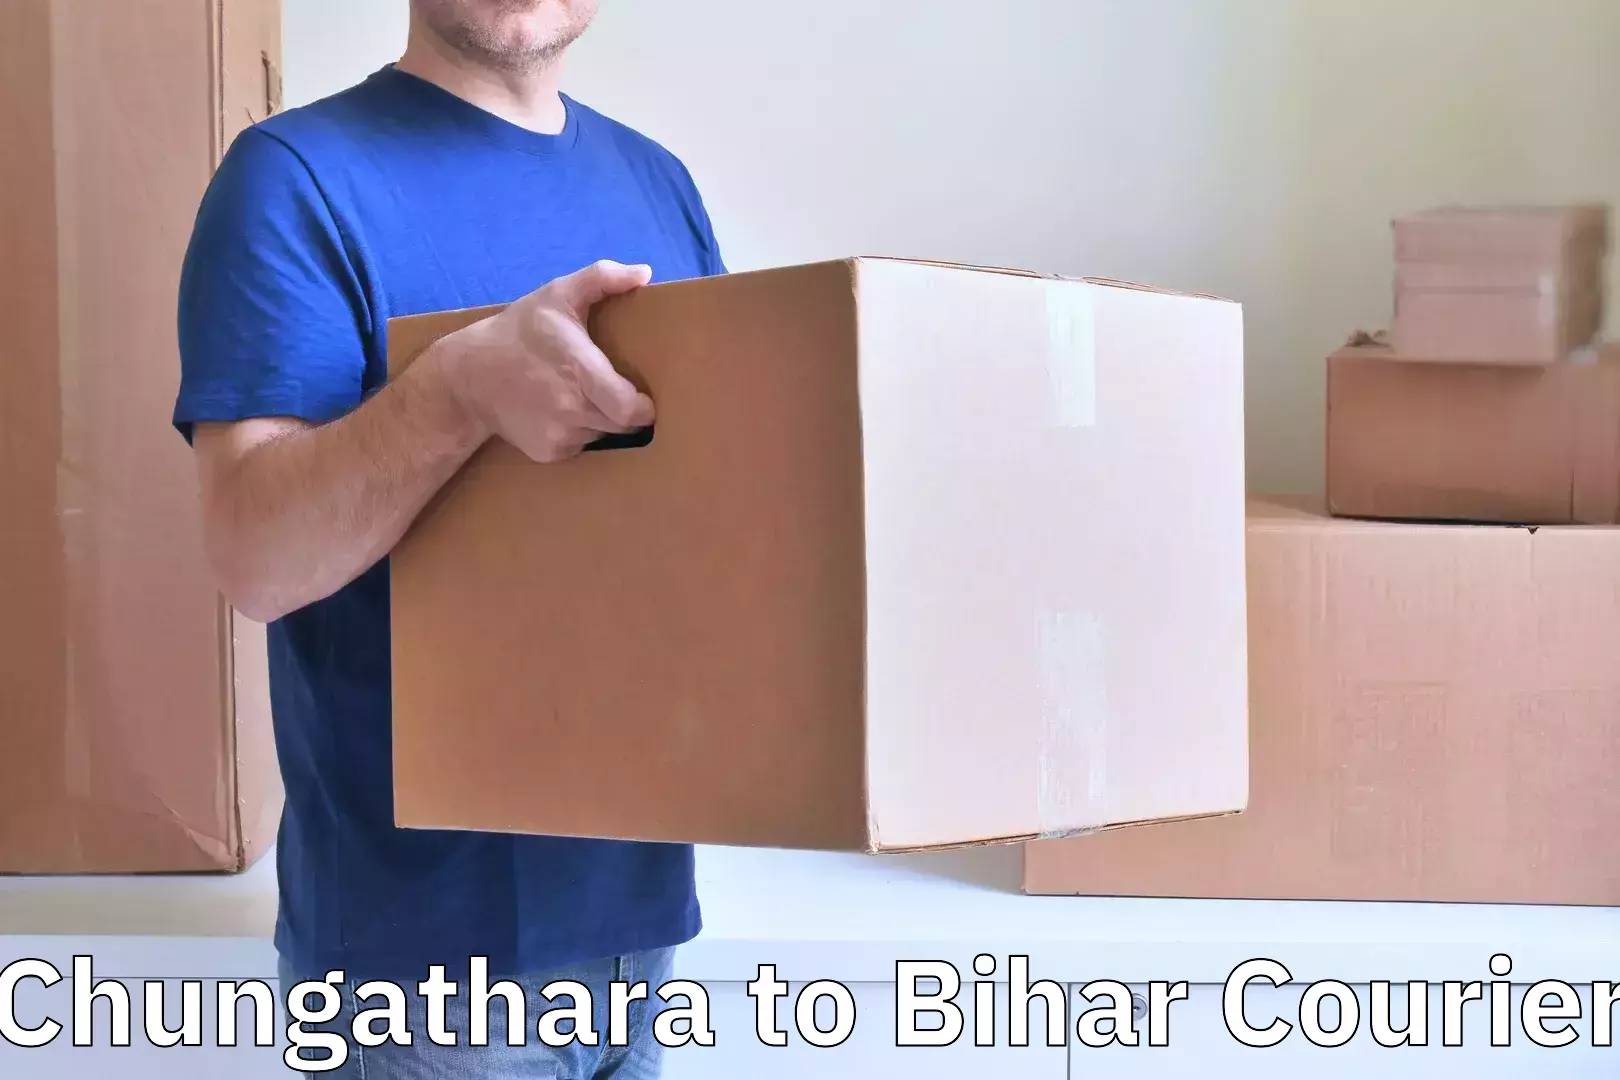 Baggage relocation service Chungathara to Aurangabad Bihar